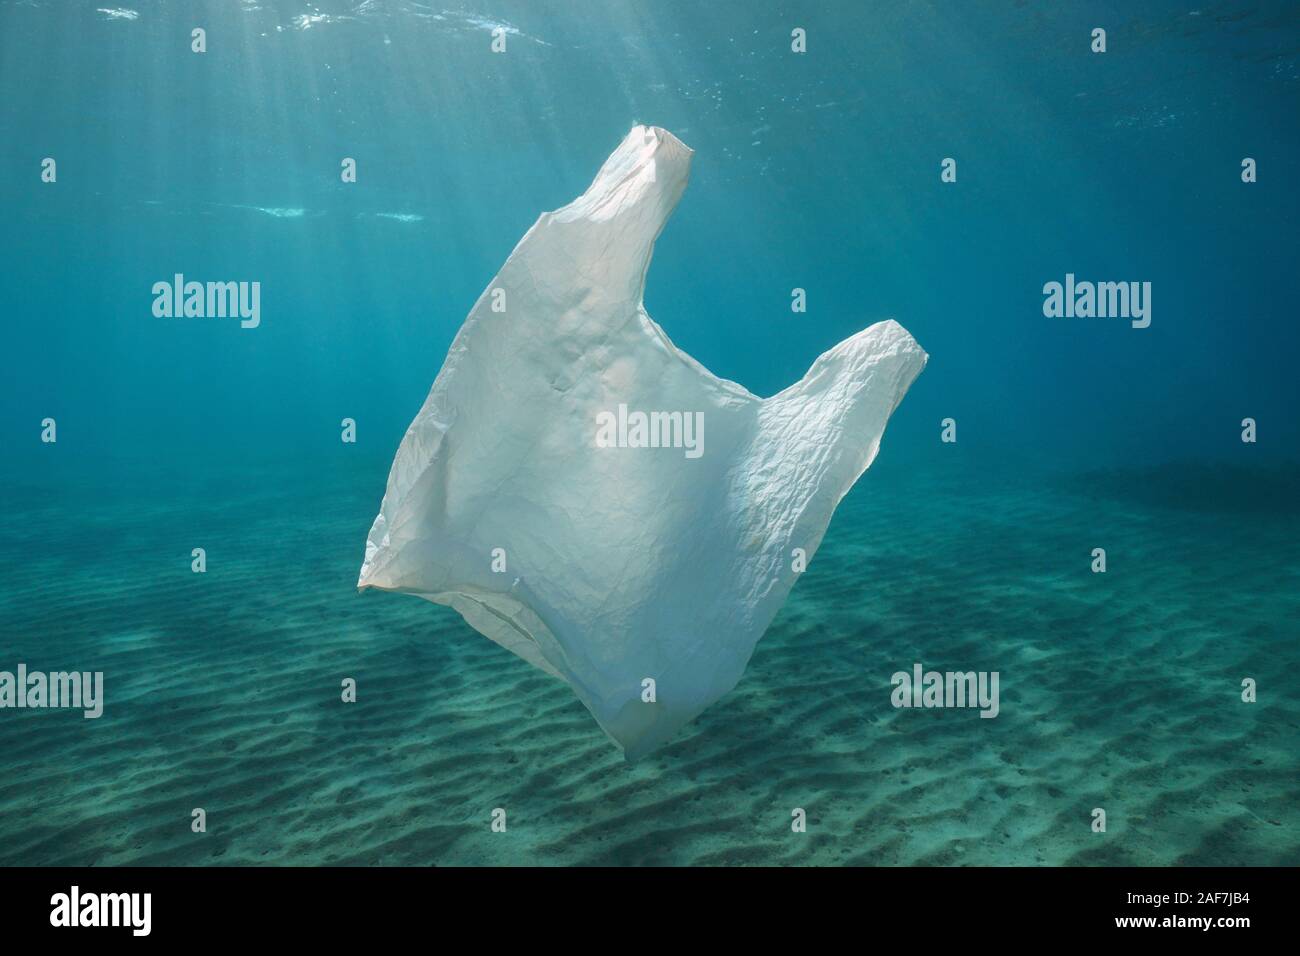 A white plastic bag adrift underwater pollution in the ocean Stock Photo